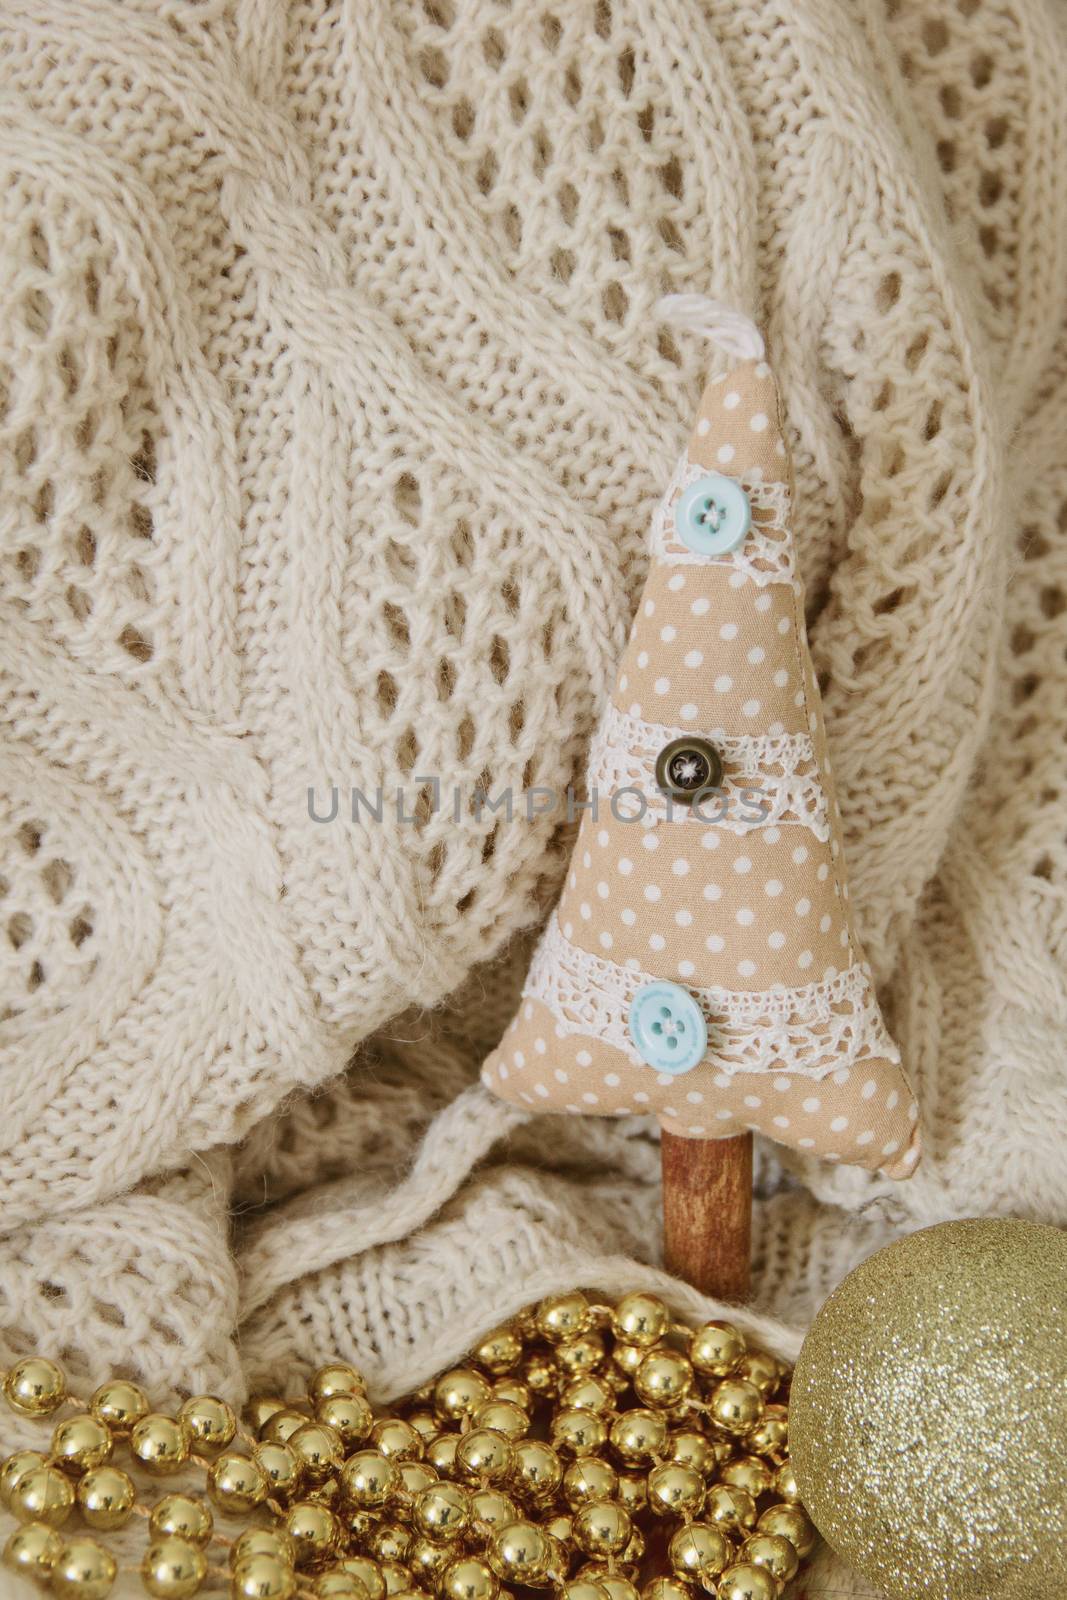 textile handmade toy fir tree for Christmas. Photo by Irinavk